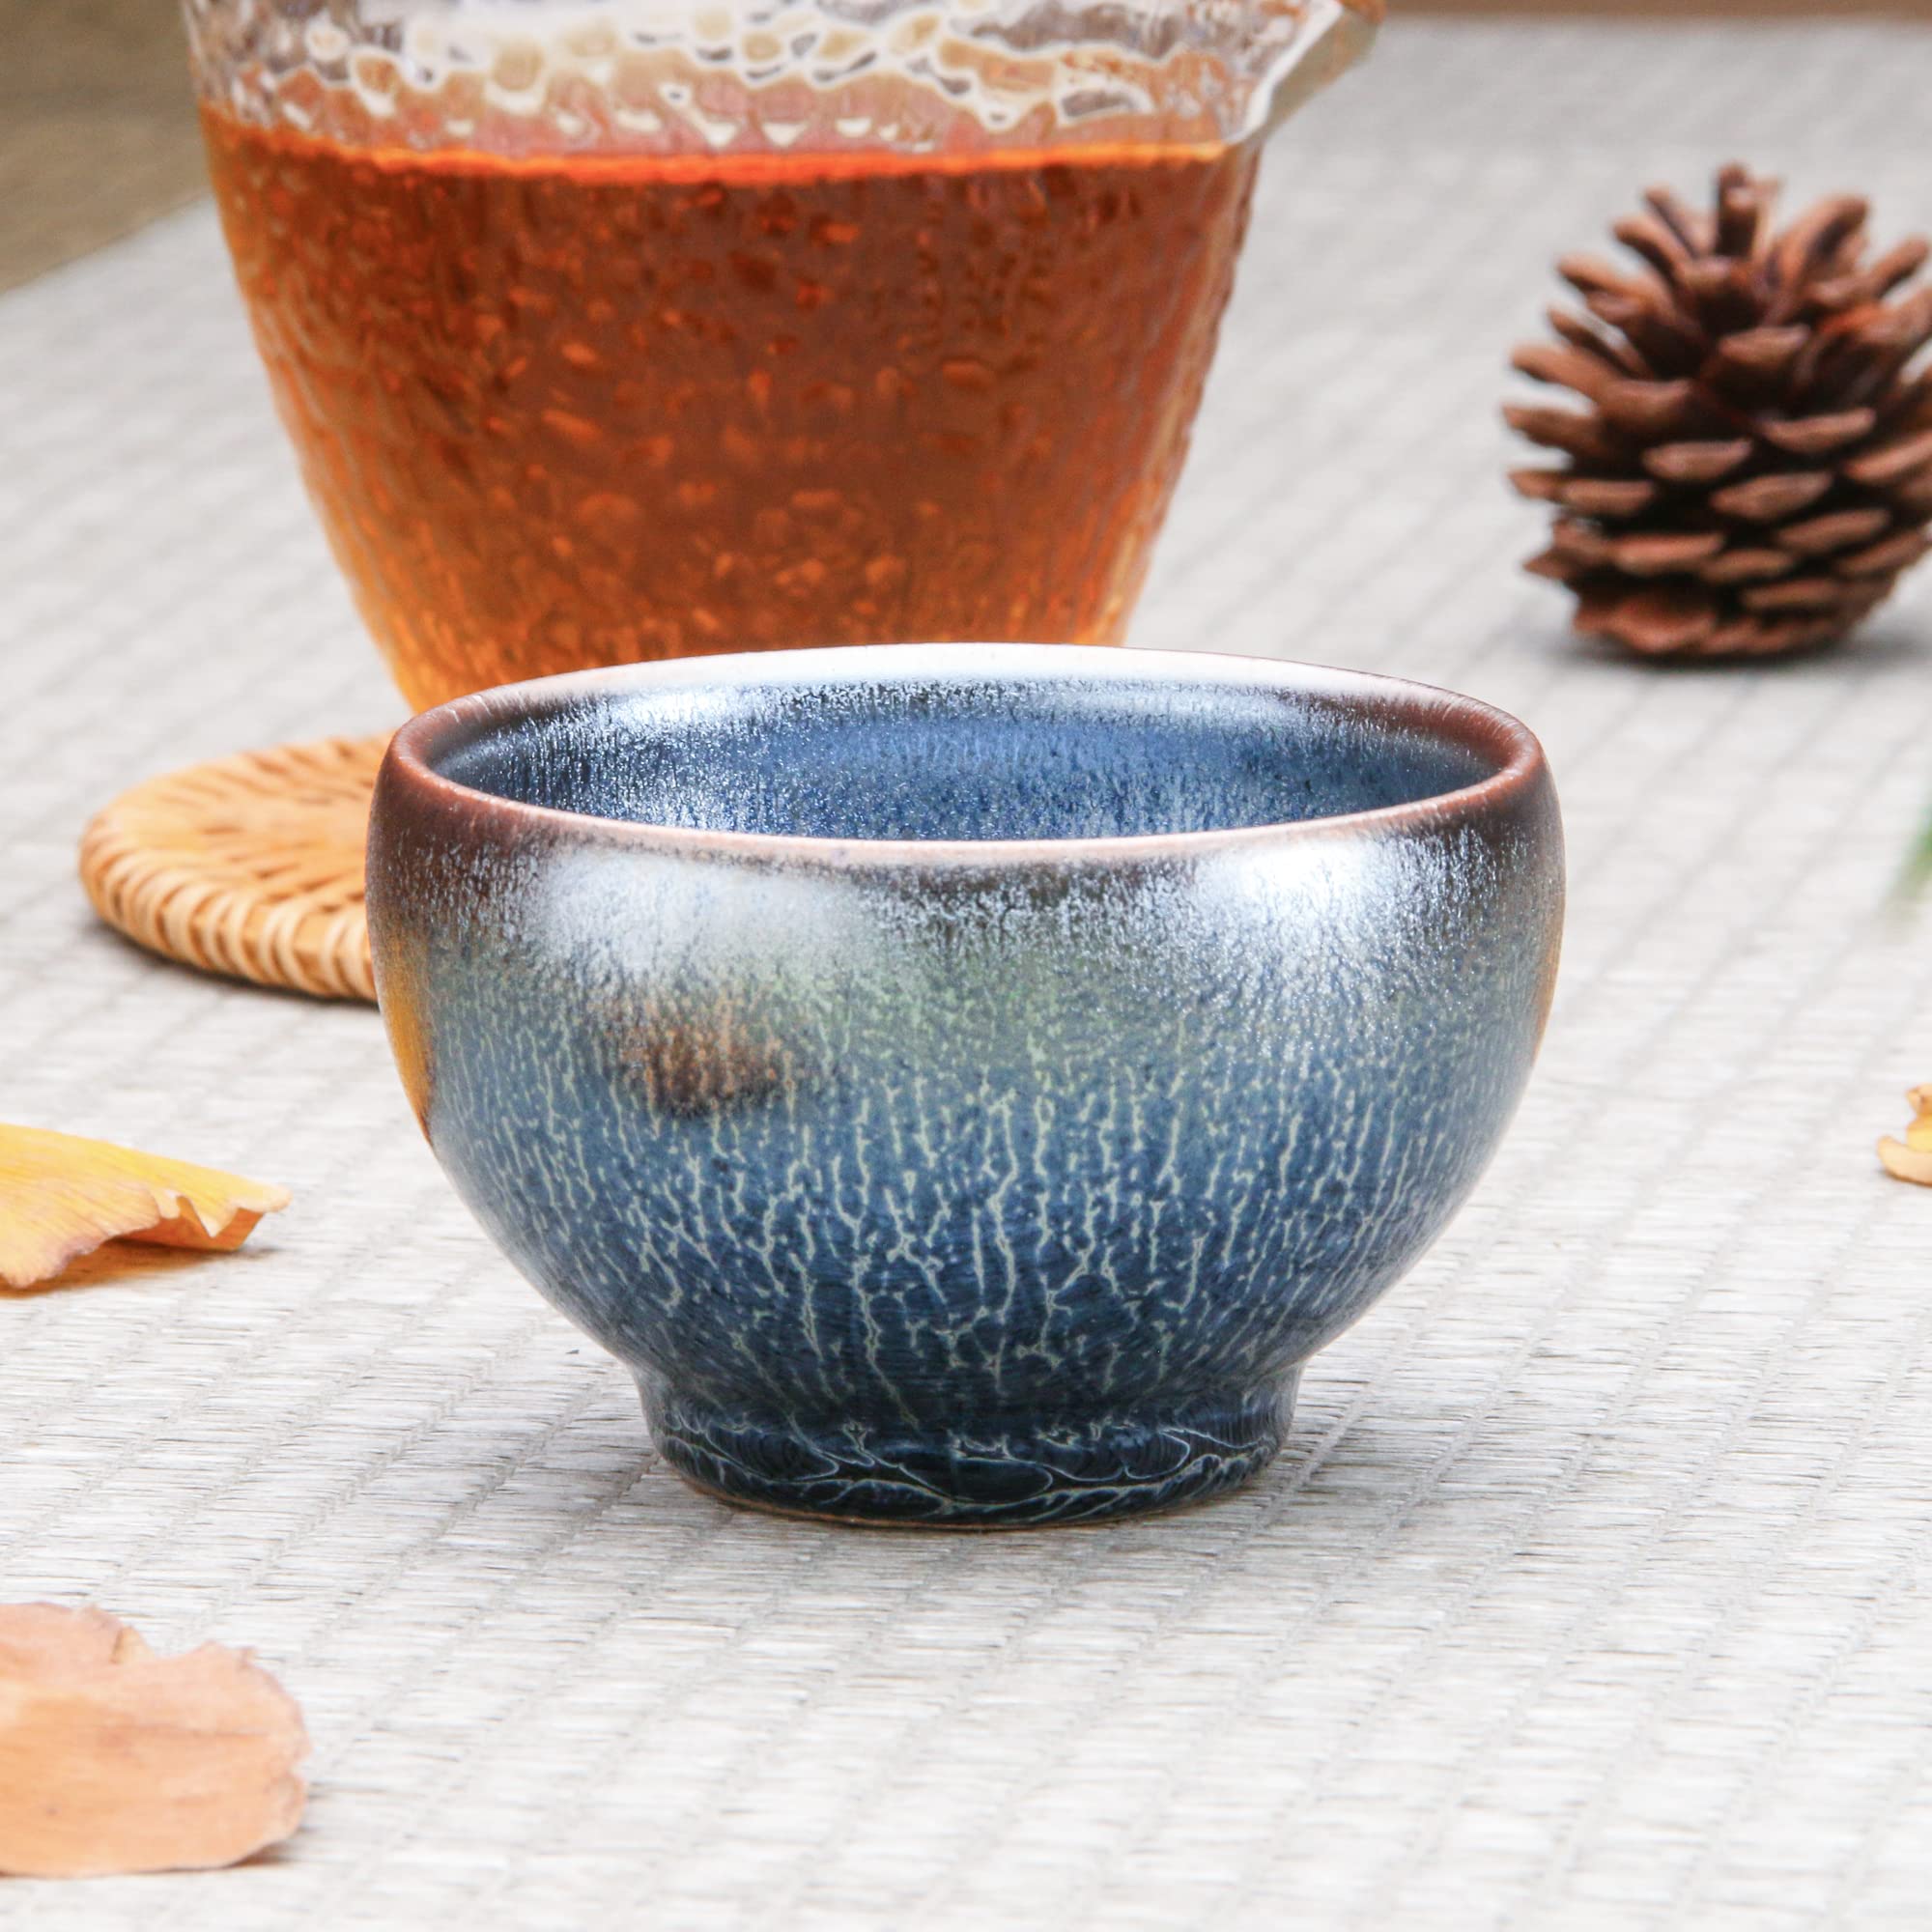 ISHIMORI HOUSE Chinese Tea Cup, Japanese Tea Cups, 3.5oz Ceramic Tenmoku Kung Fu Tea Cup, Azure Blue Dragon Scales Tea Cup Gift